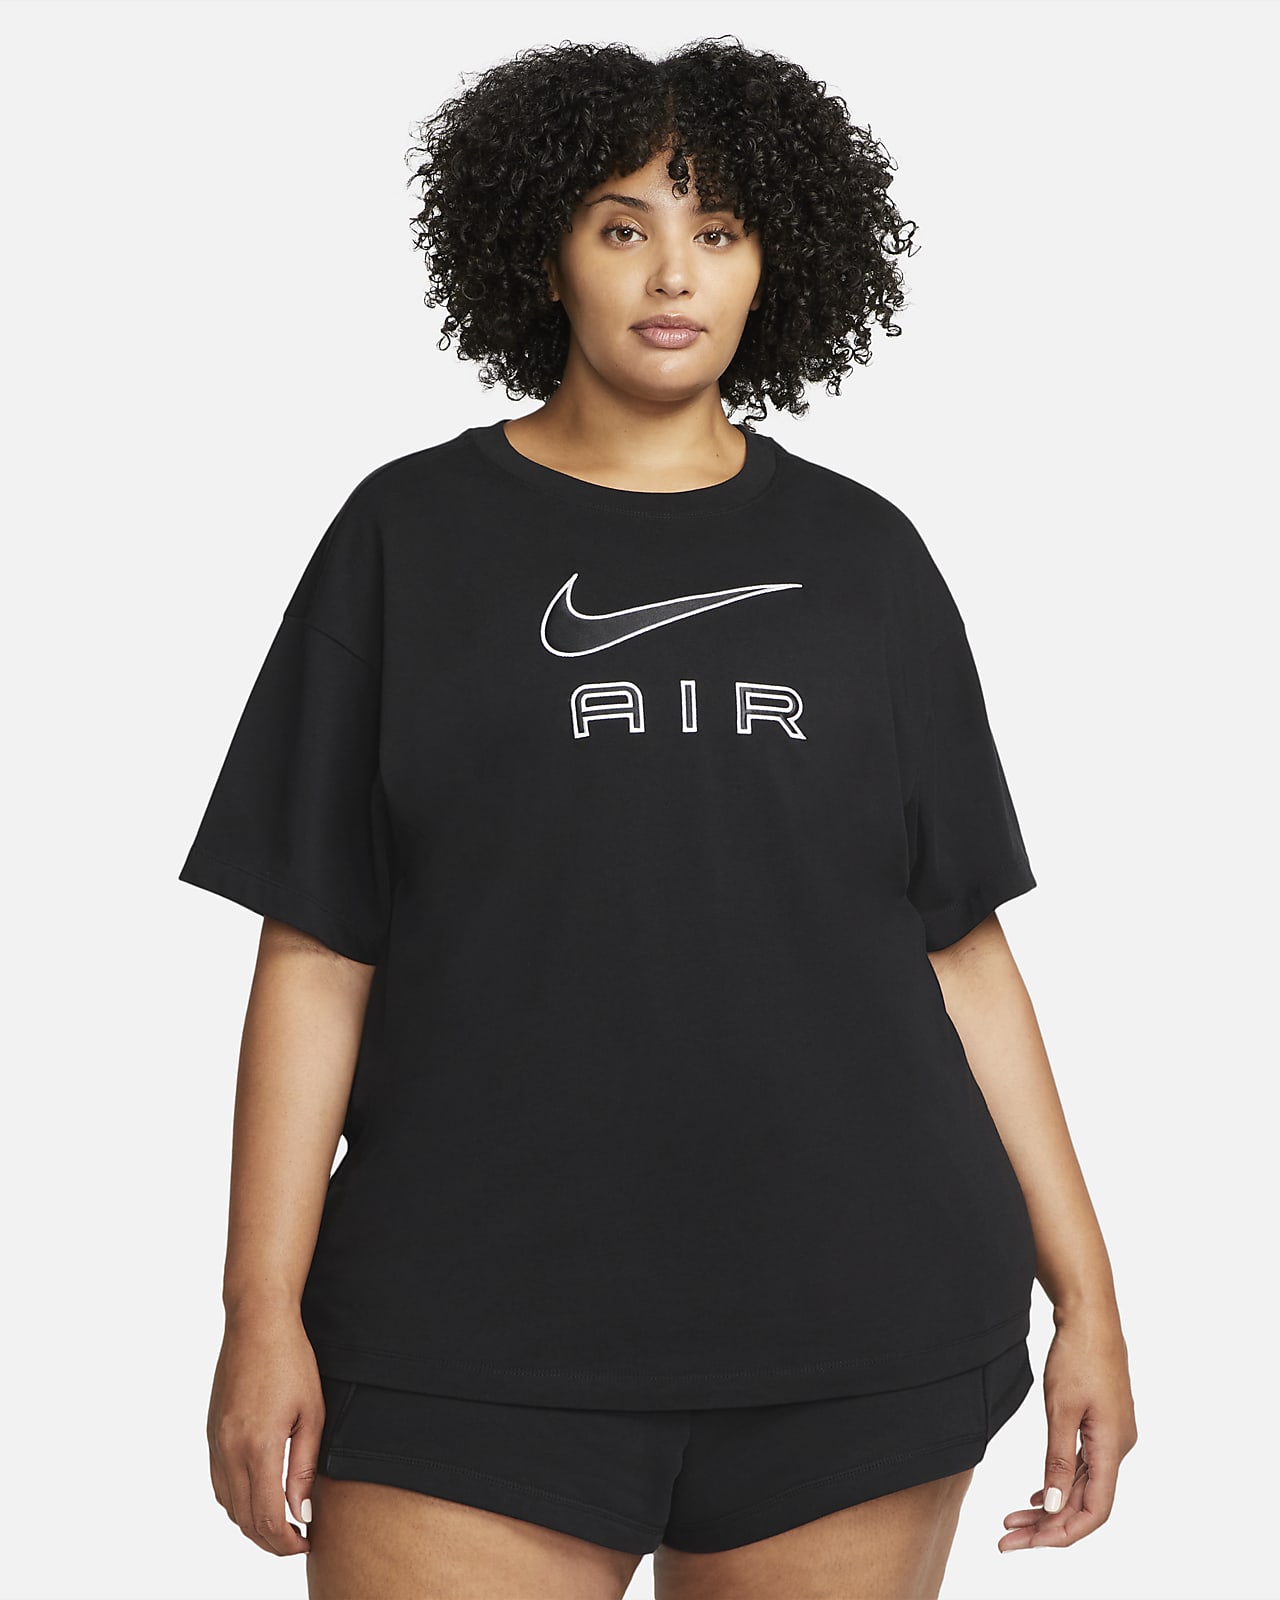 Nike Air Women's T-Shirt (Plus Size)